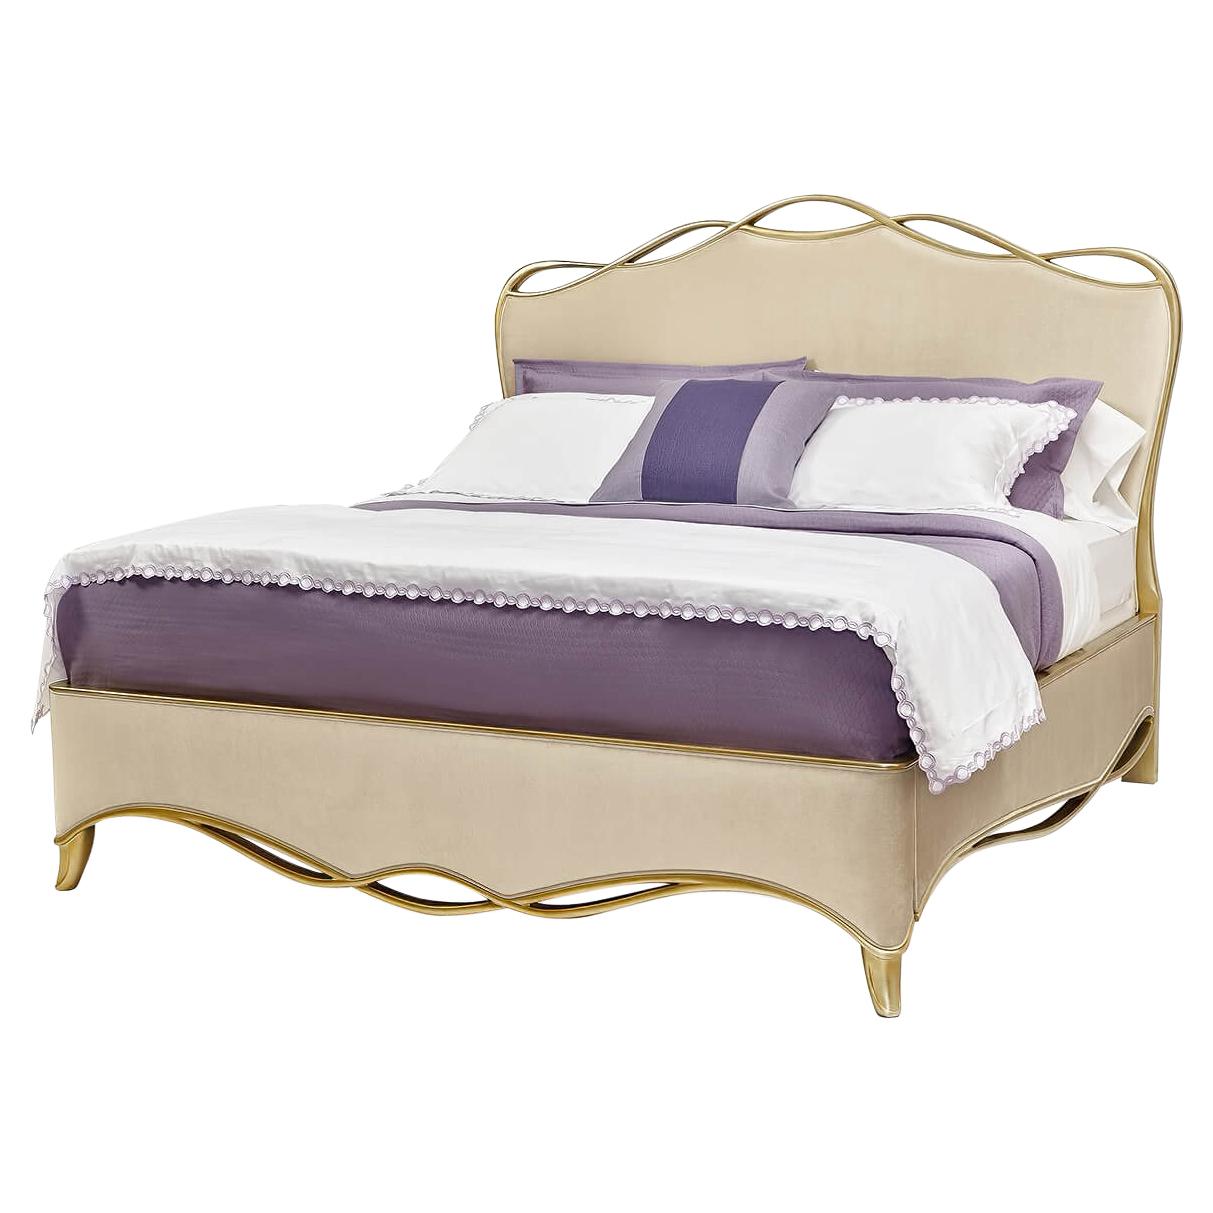 Königsbett im Rokoko-Stil mit vergoldeten Bändern